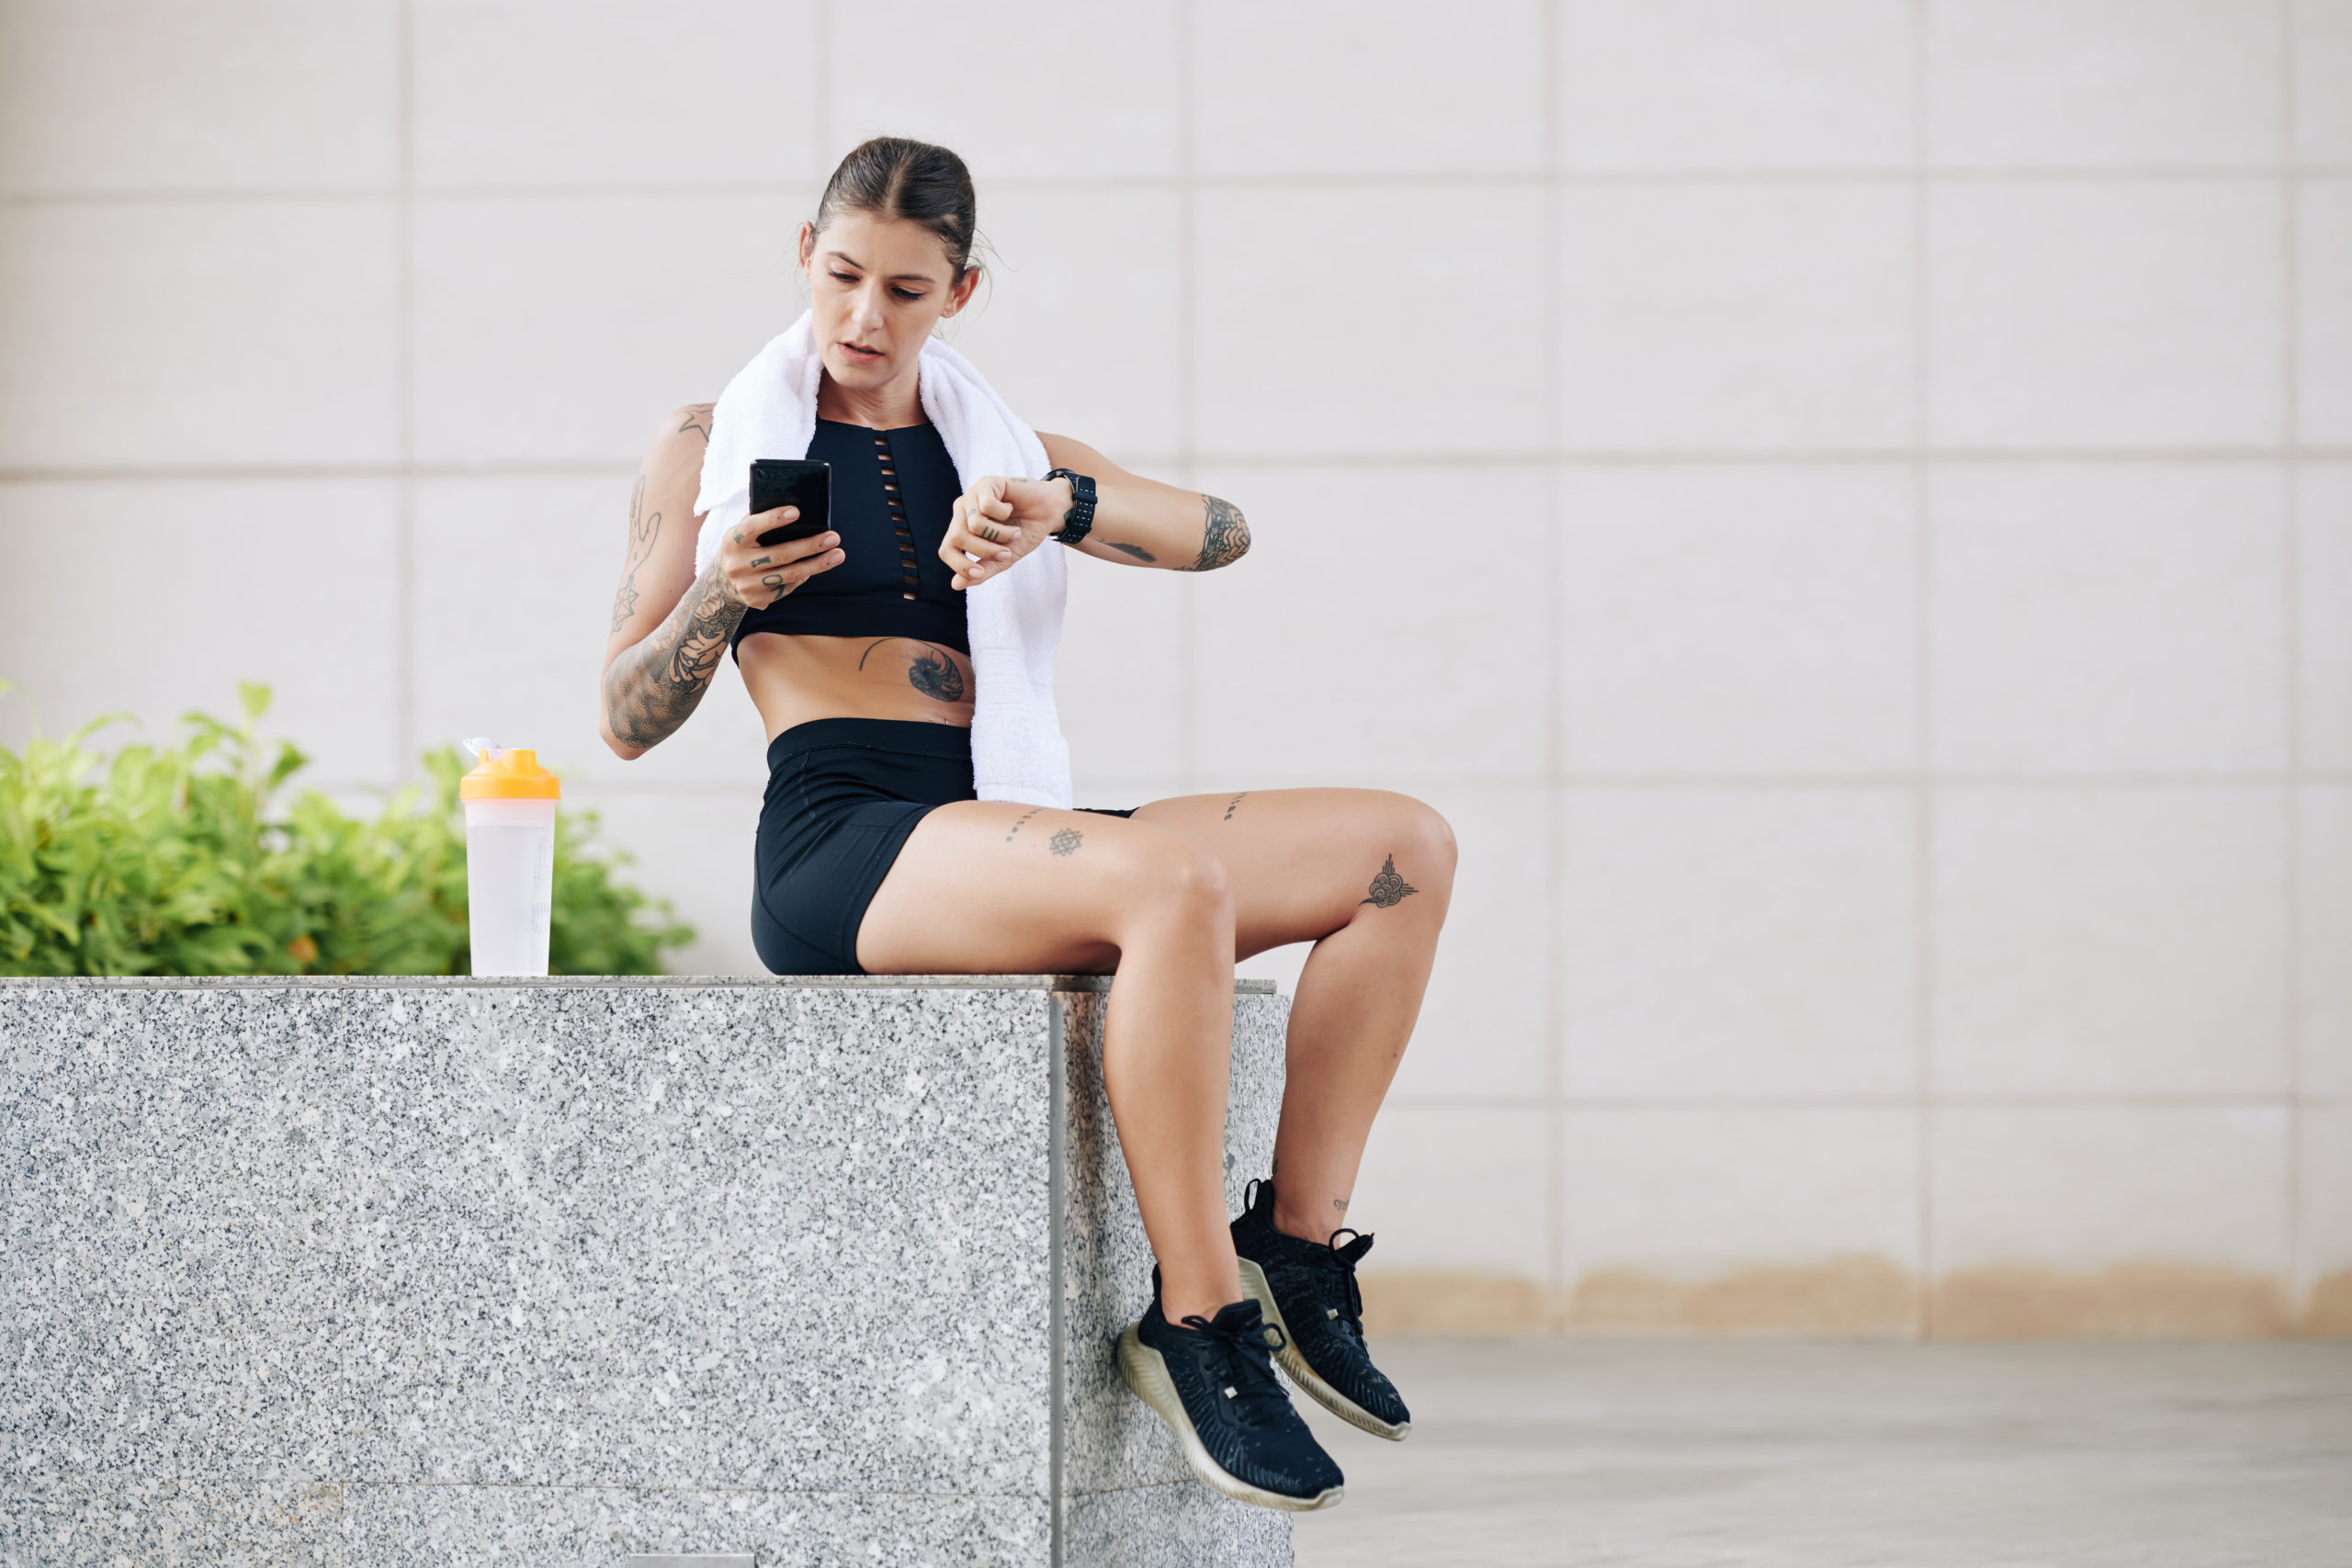 Debunking Social Media Myths on Fitness